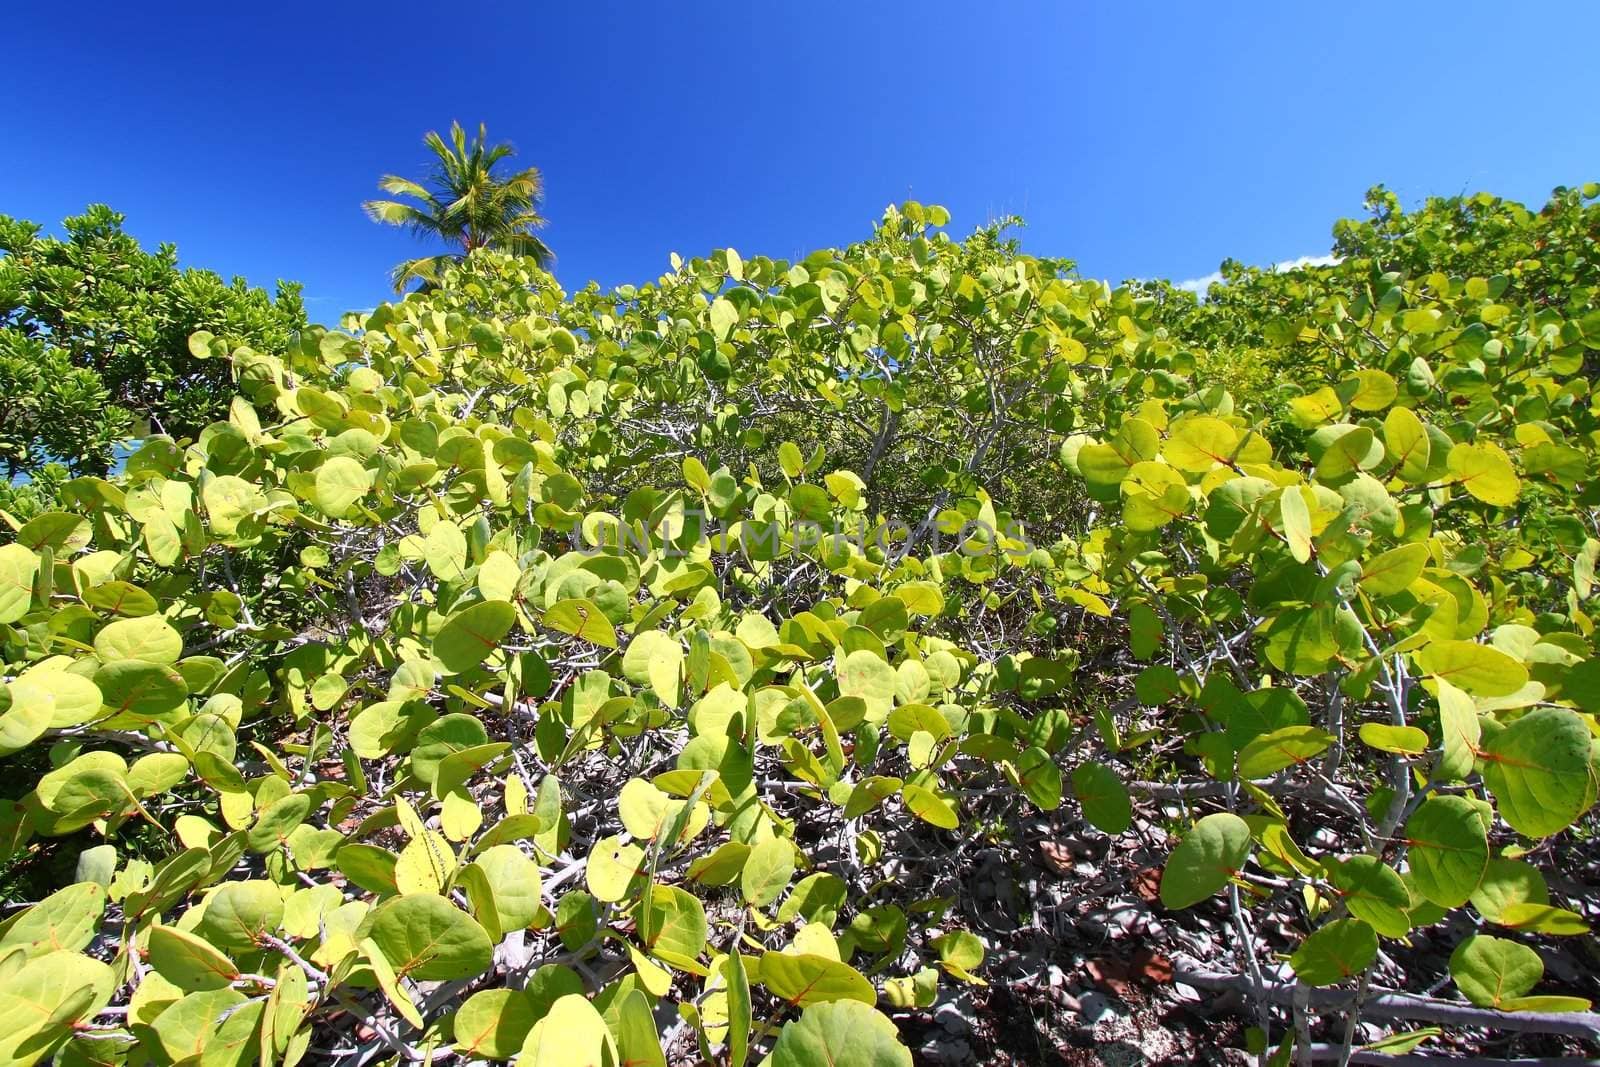 Vegetation grows on Beef Island in the British Virgin Islands.